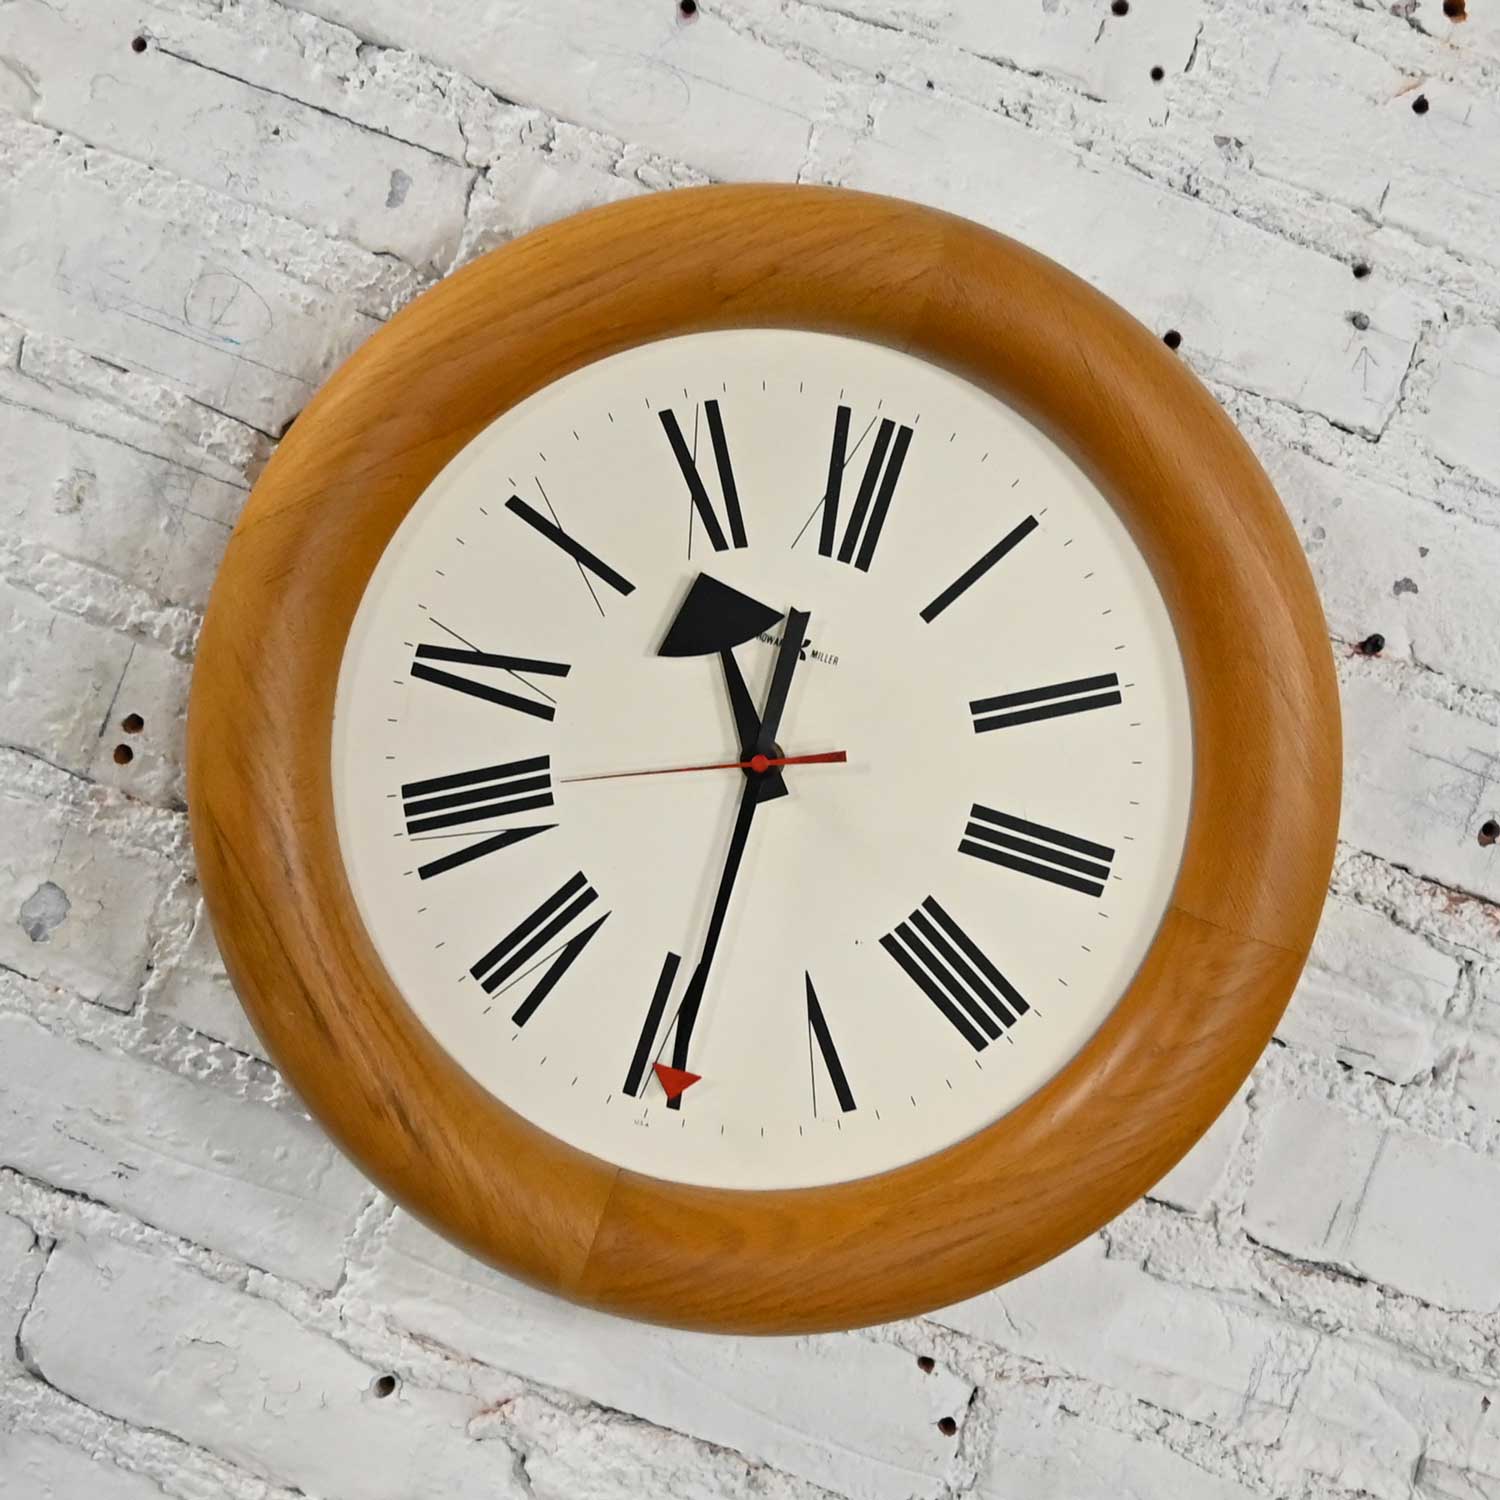 Vintage Stationmaster #611 Round Natural Oak Wall Clock by Arthur Umanoff for Howard Miller Clocks